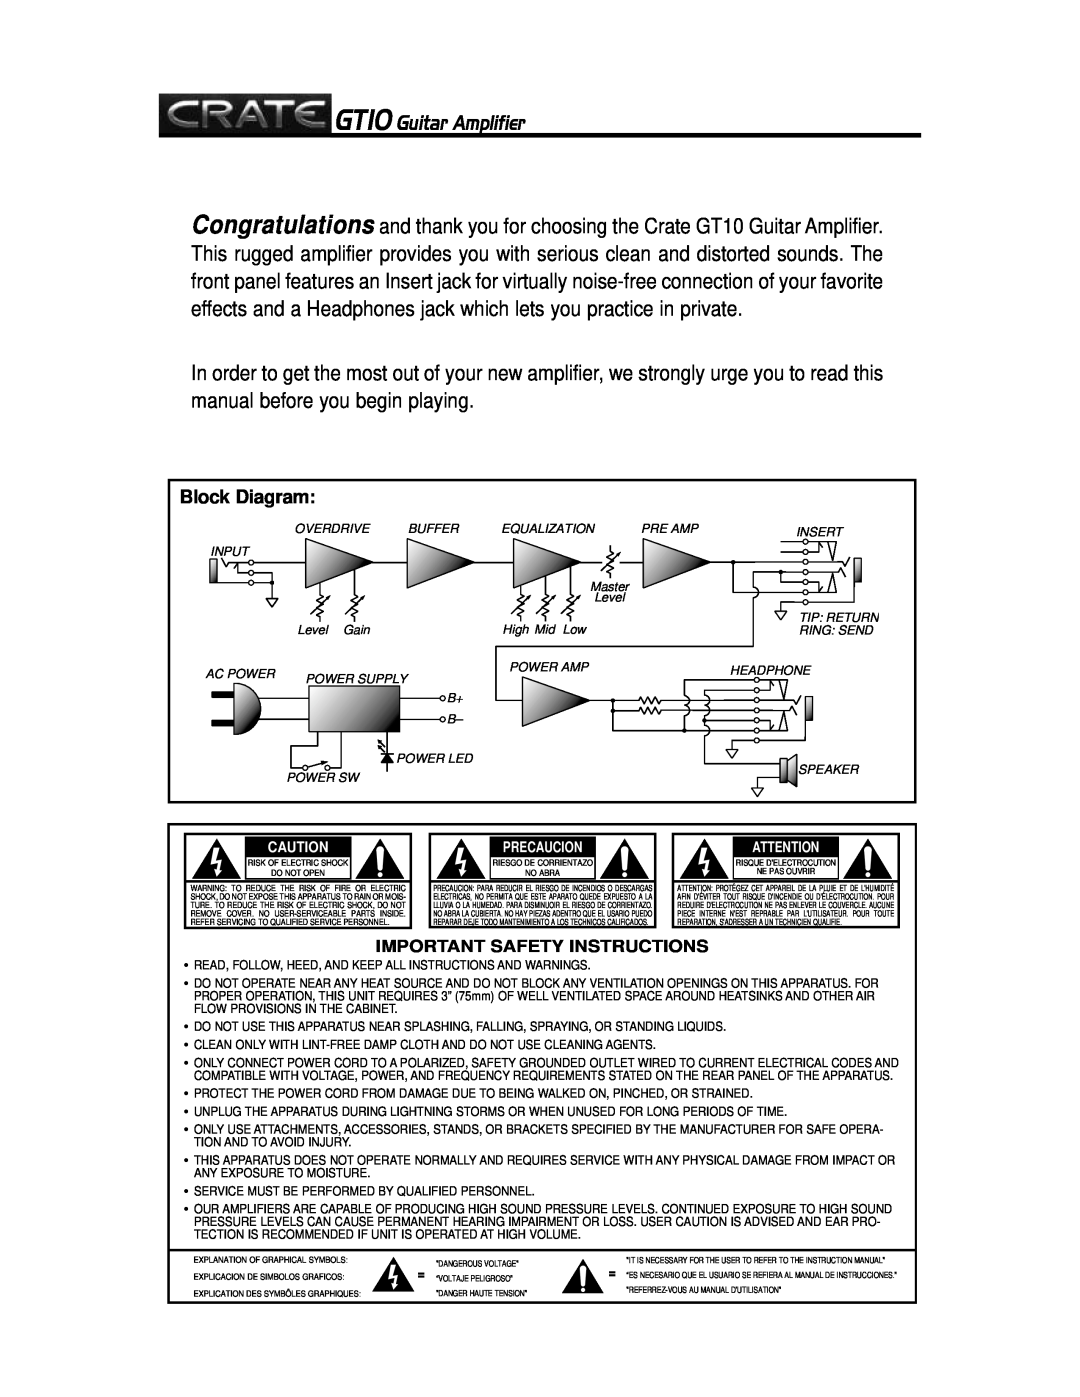 Crate Amplifiers owner manual GT10 Guitar Amplifier, Block Diagram, Important Safety Instructions, Precaucion 